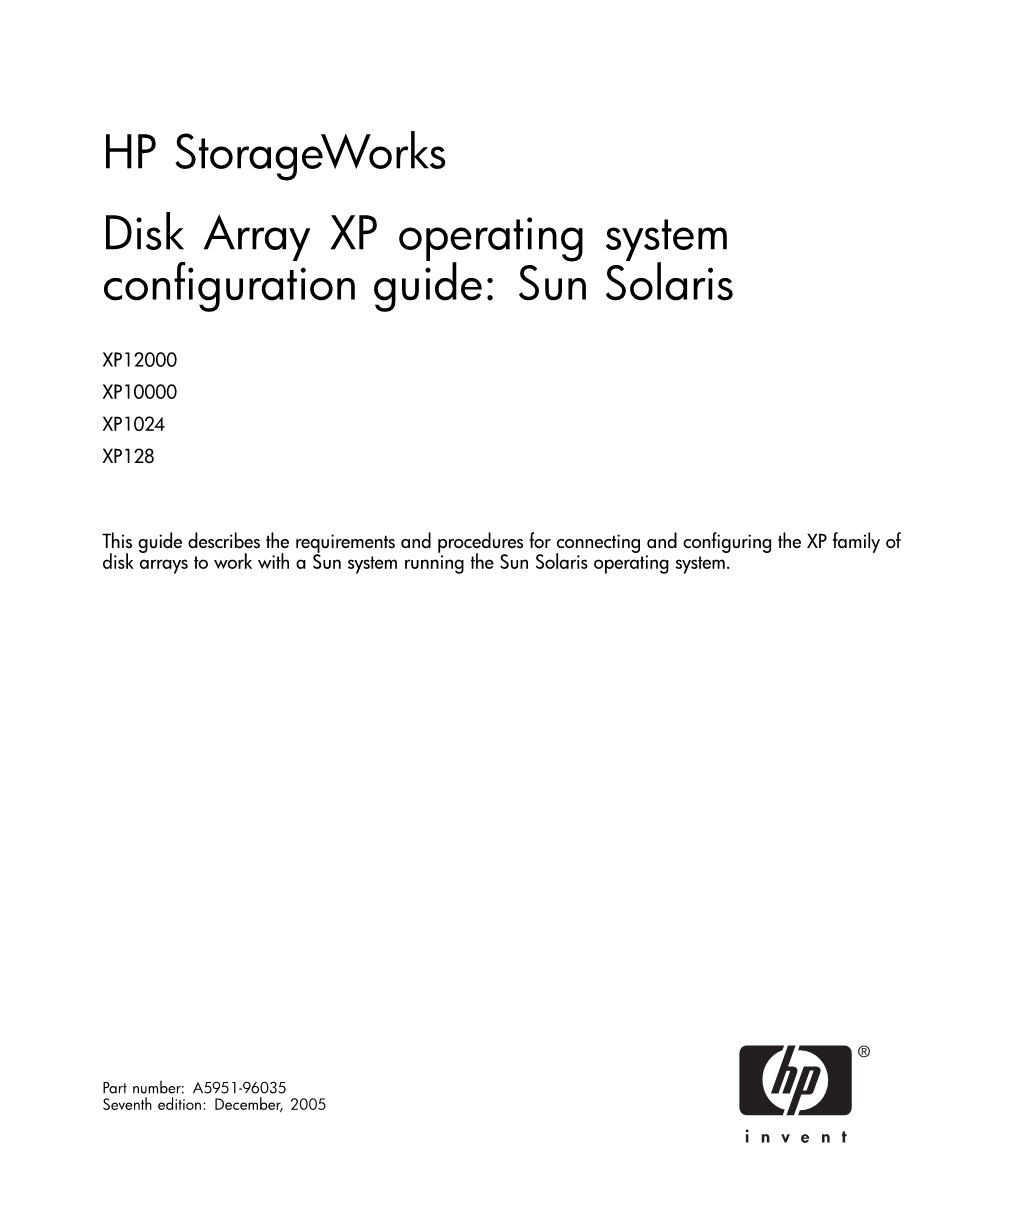 HP Storageworks XP Disk Array Sun Solaris OS Configuration Guide